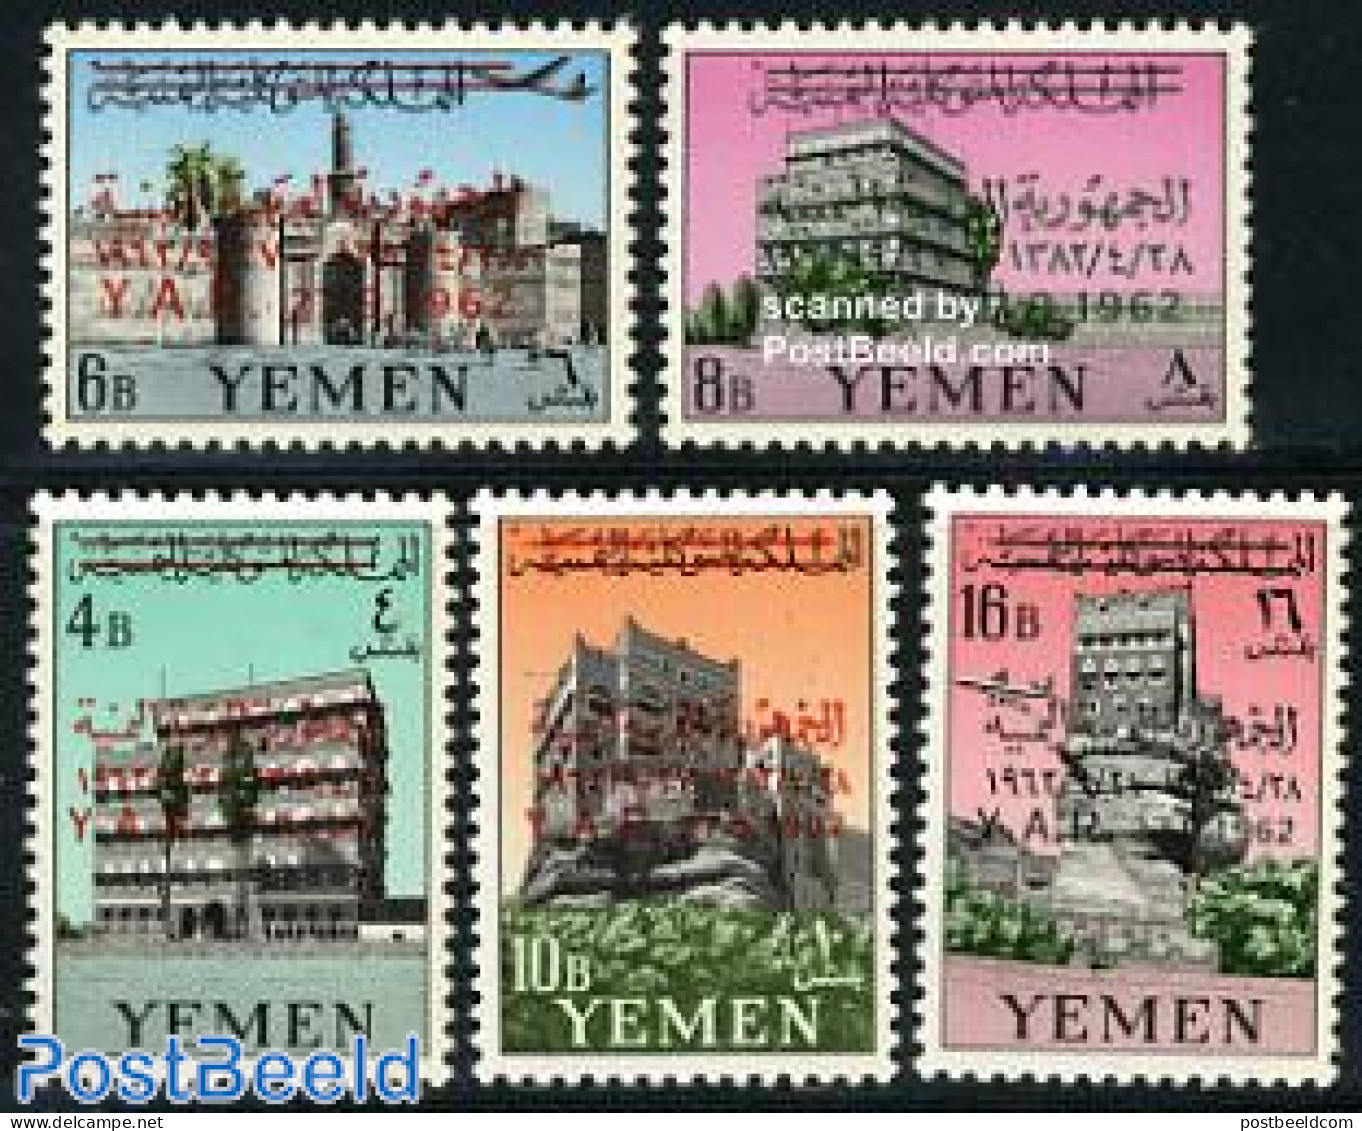 Yemen, Arab Republic 1963 Arab Repoublic Overprints On Defintives 5v, Mint NH, Art - Castles & Fortifications - Kastelen